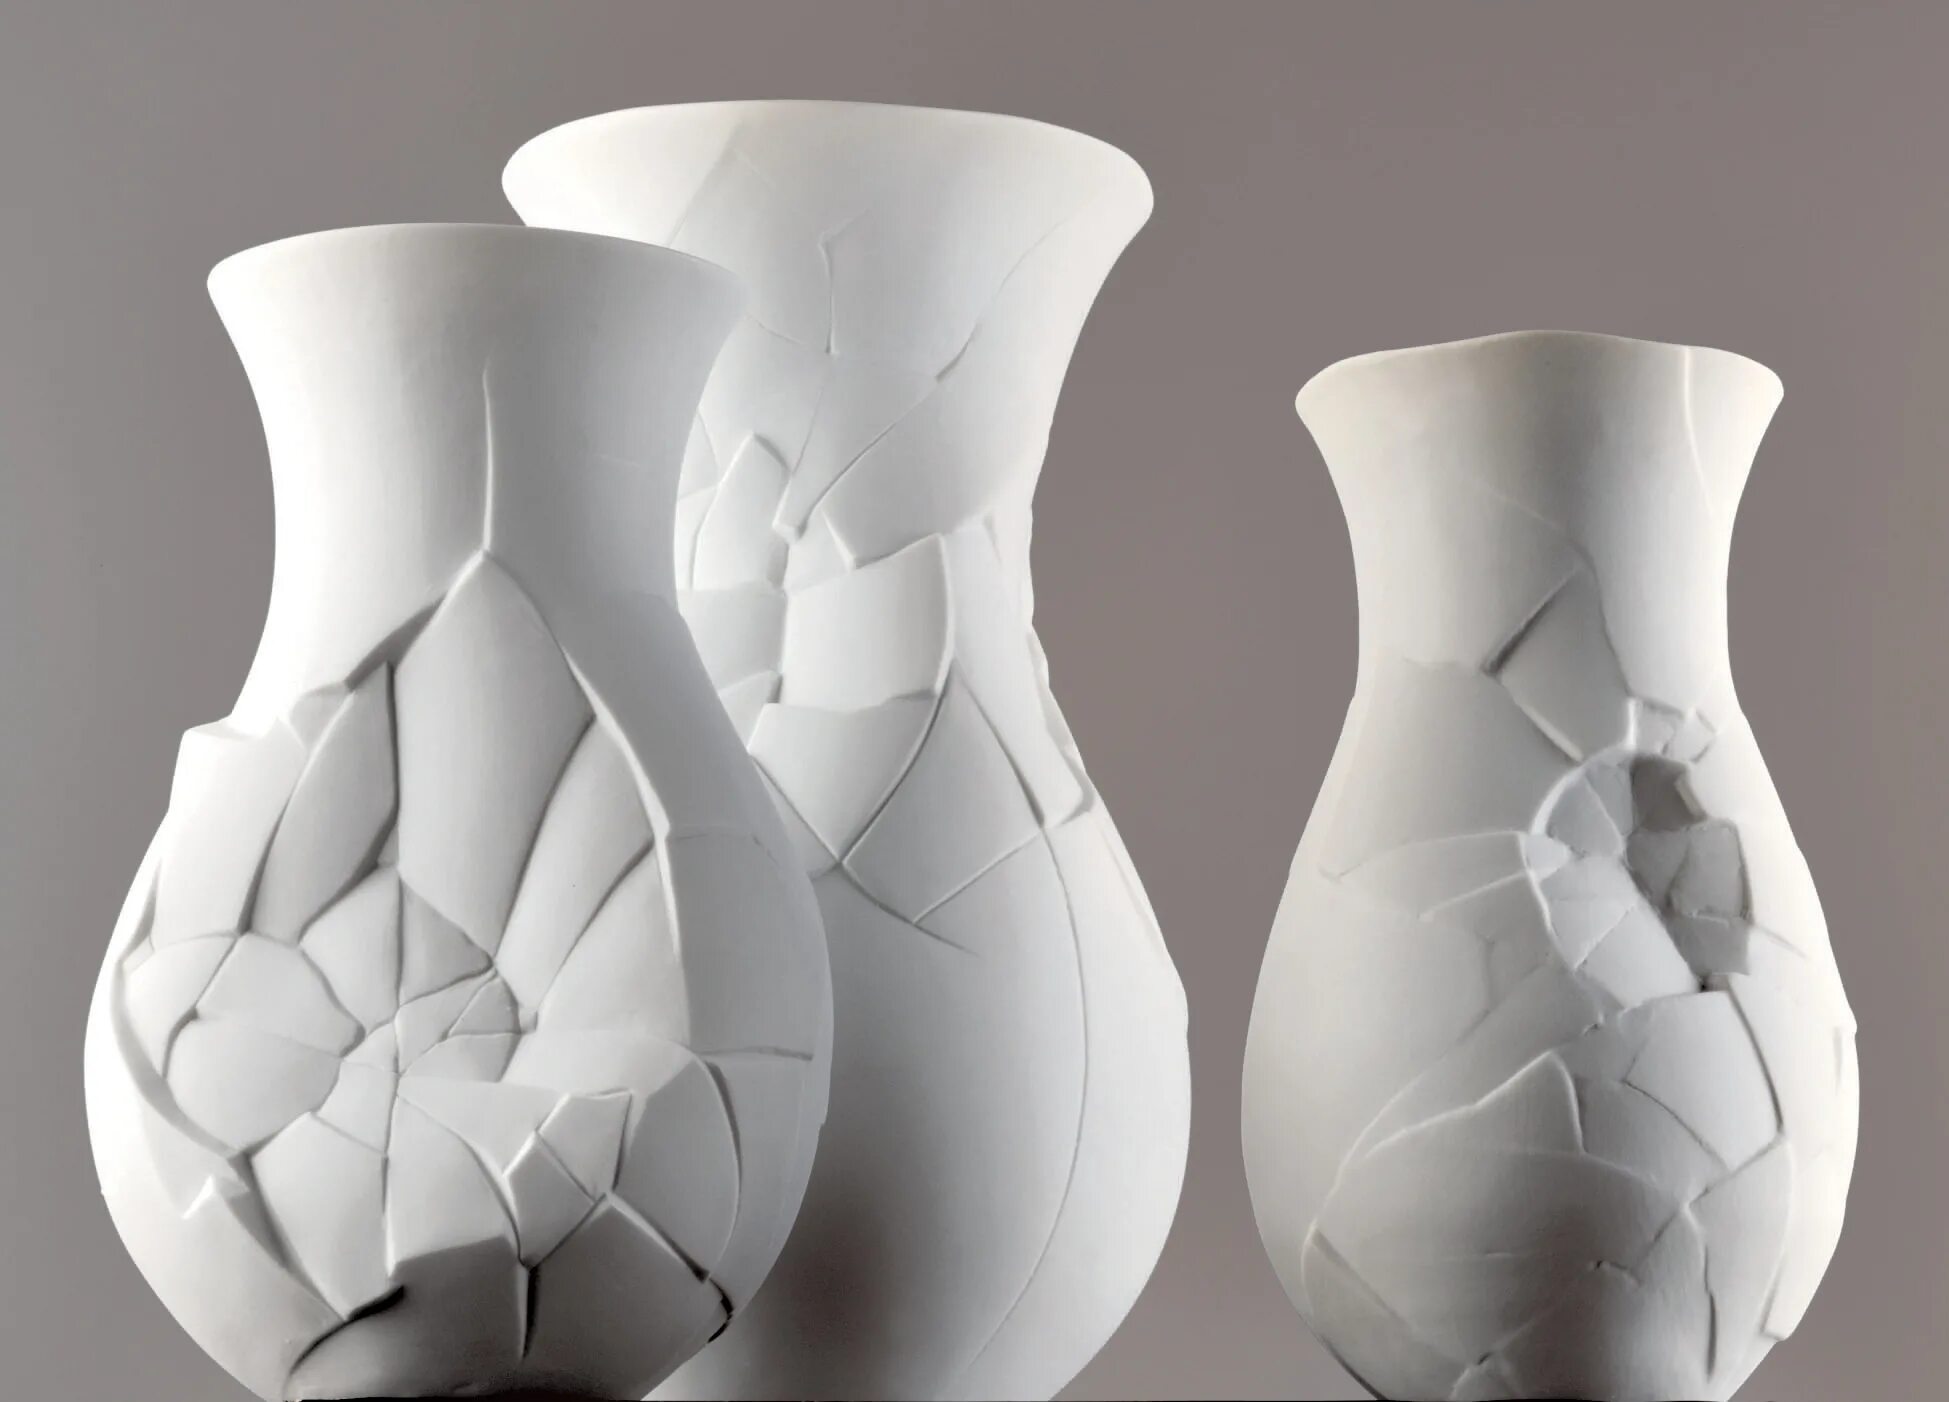 Ваза Розенталь Studio line Винтаж. Rosenthal фарфор ваза. Ваза с трещинами. Разбитая керамическая ваза.